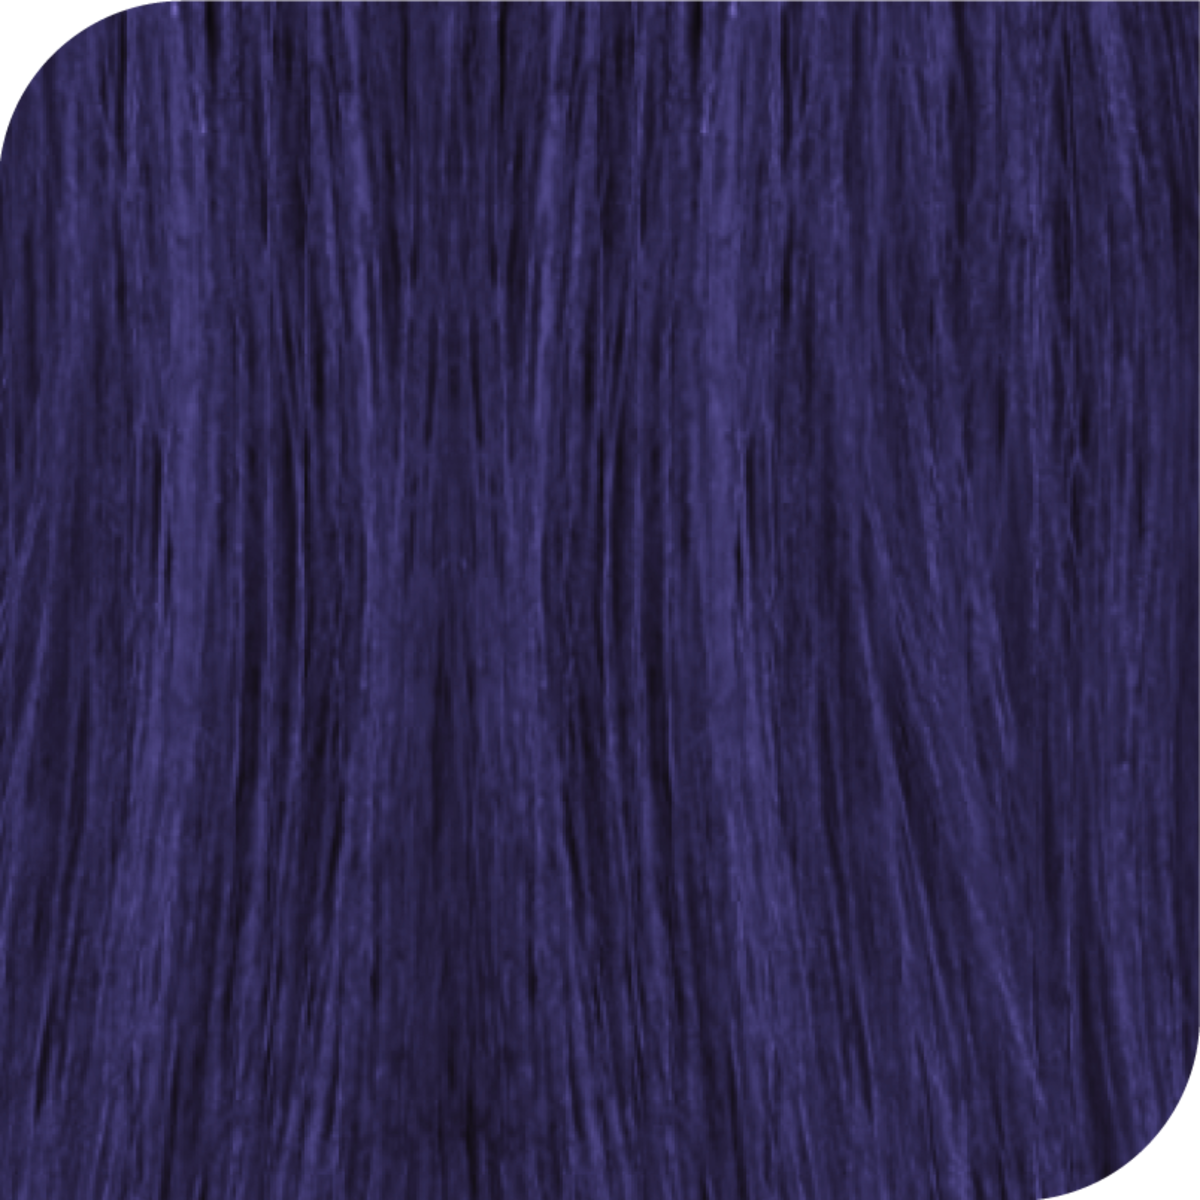 Revlon Pro Nutri Color Filters 020 - Lavender 100 ml